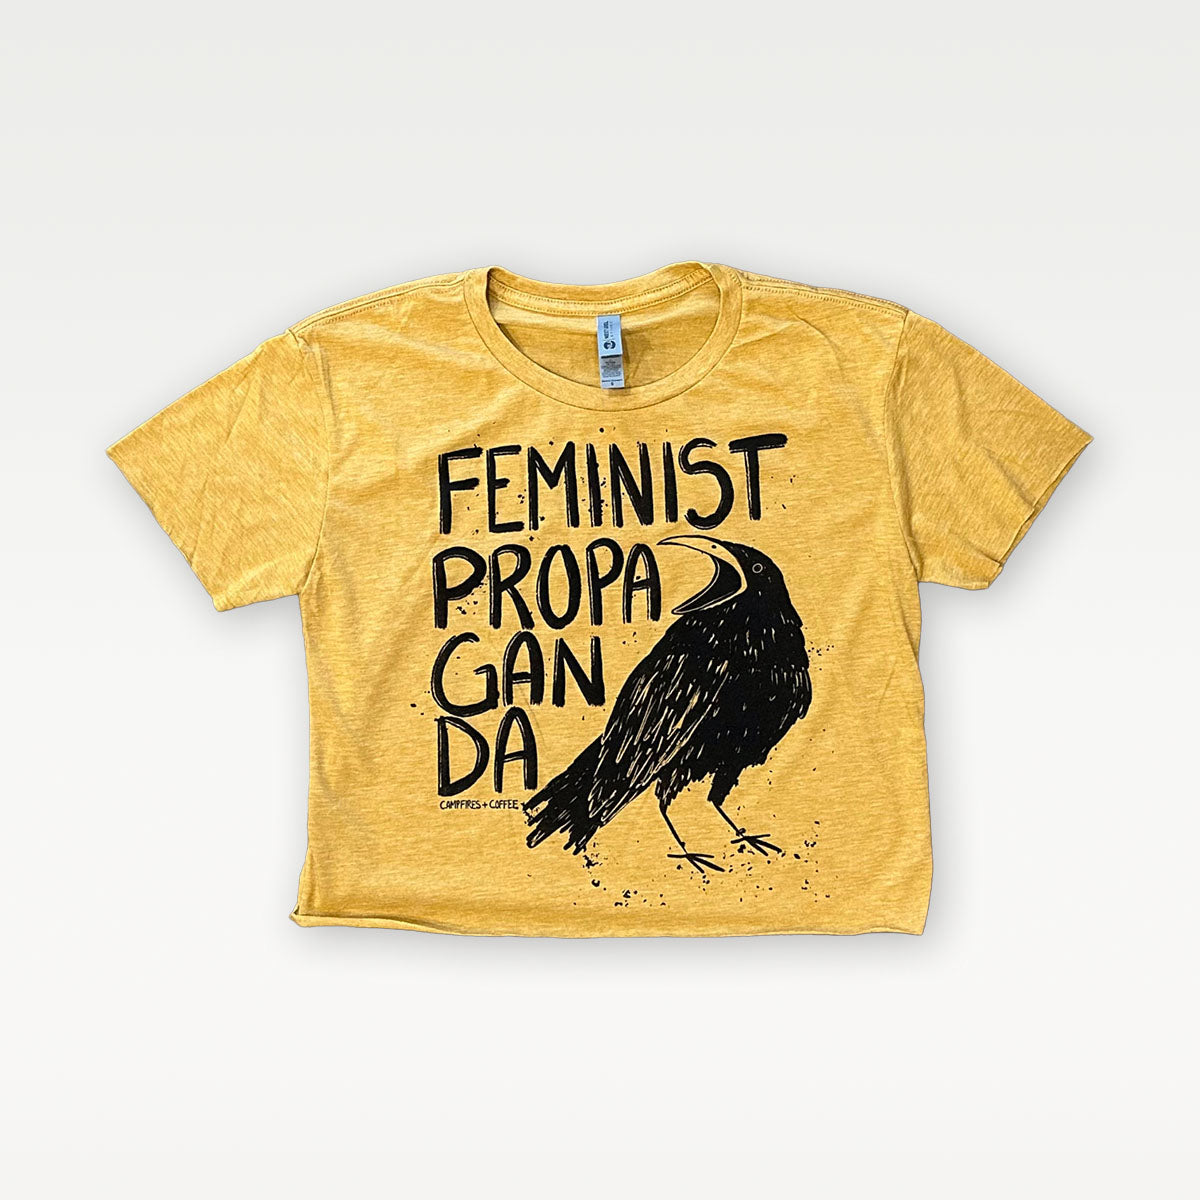 Feminist Propaganda Crow Crop Top